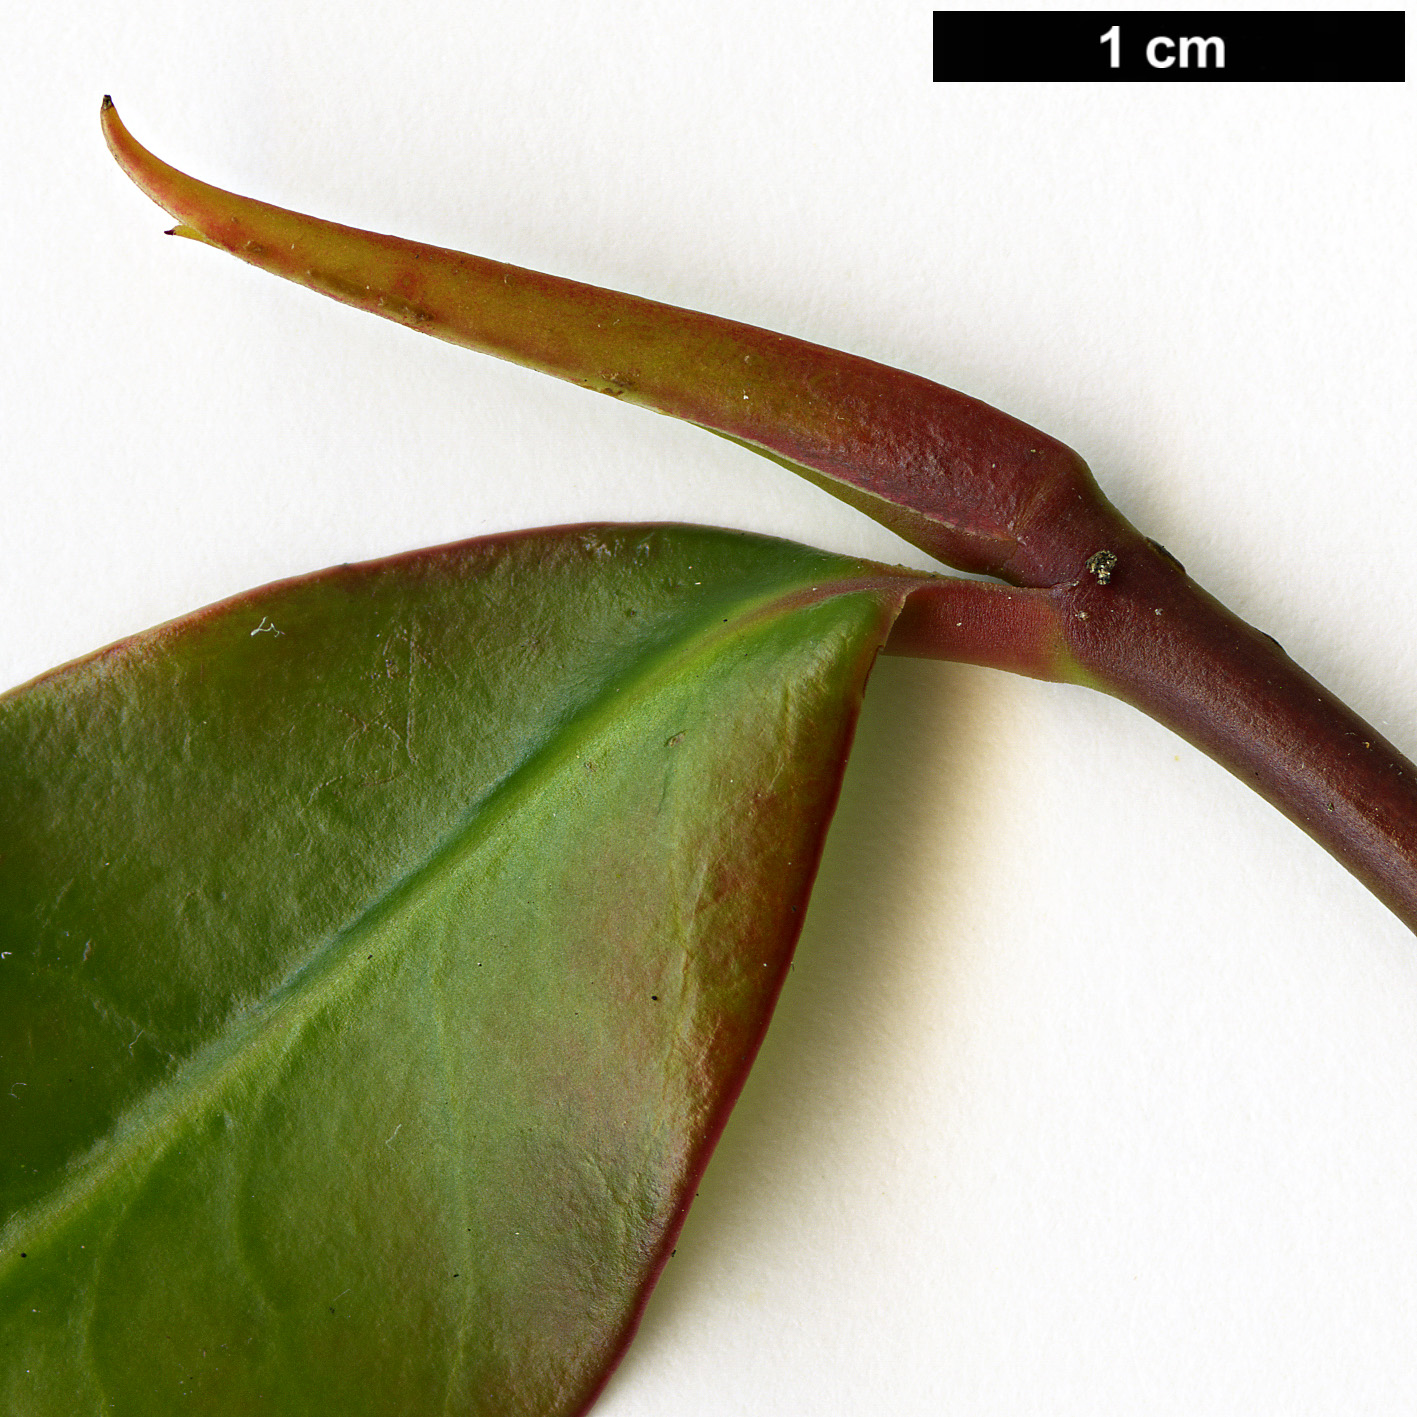 High resolution image: Family: Pentaphylacaceae - Genus: Cleyera - Taxon: japonica